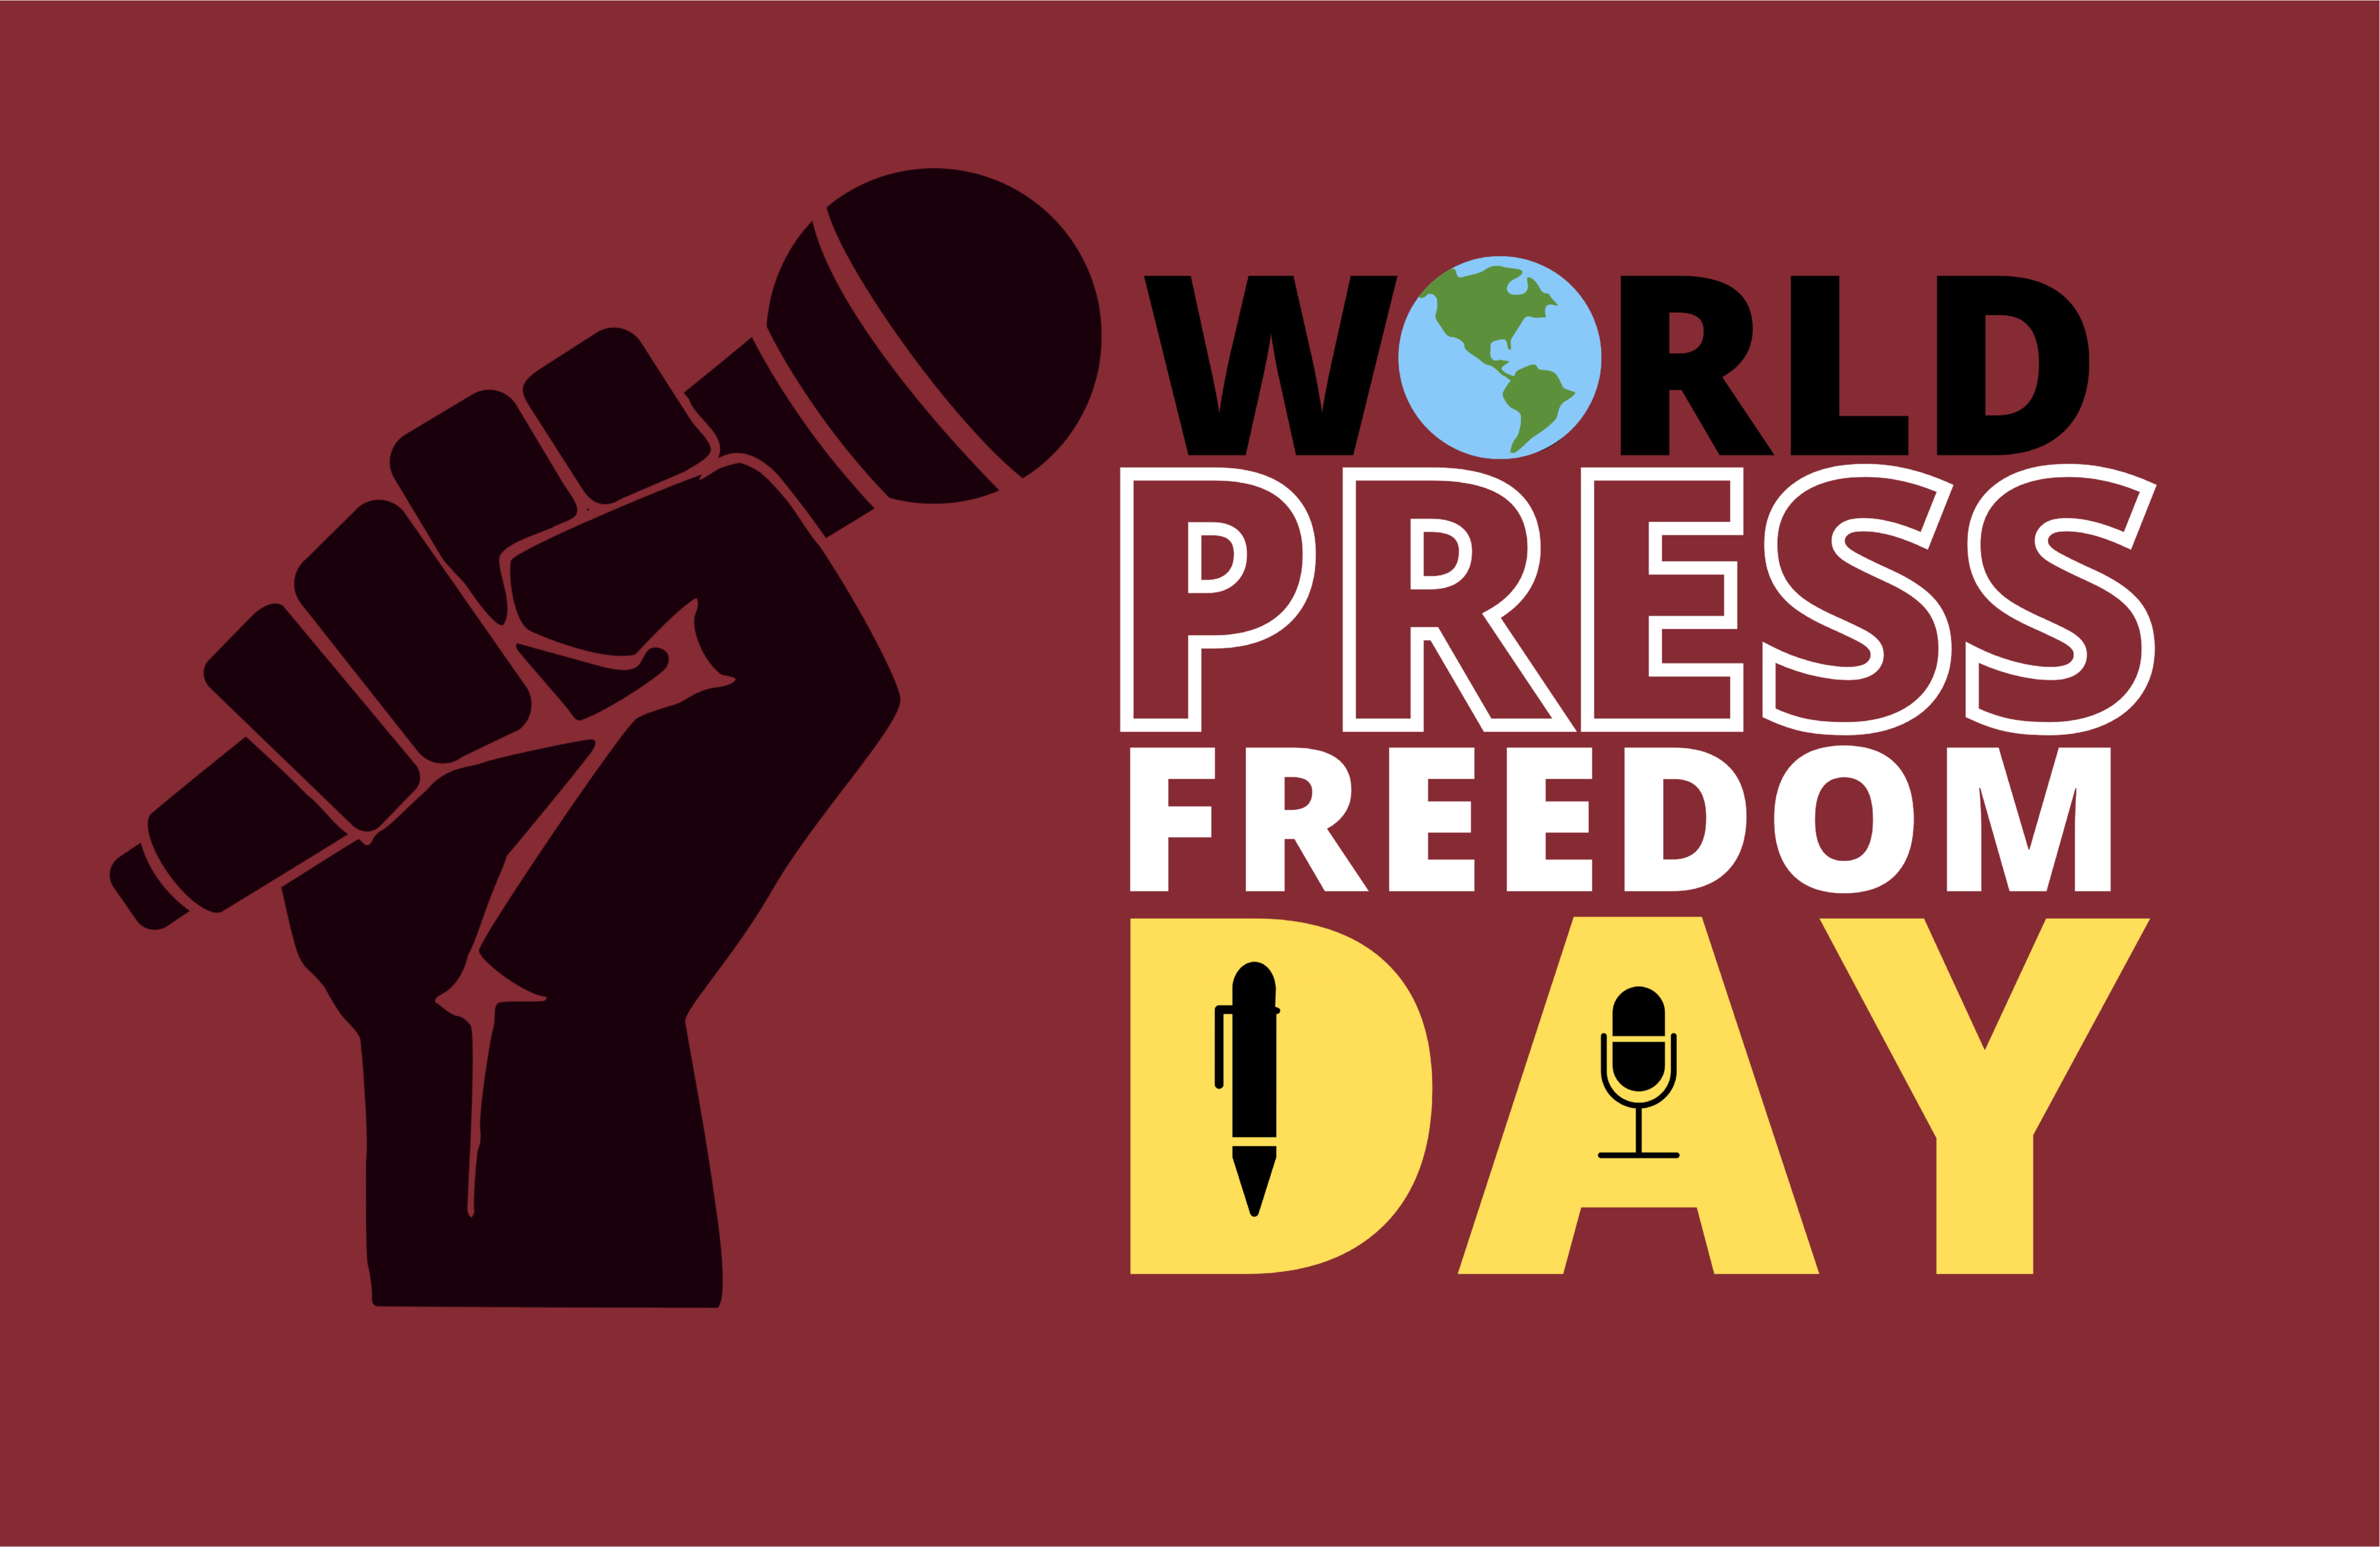 World Press Freedom Day